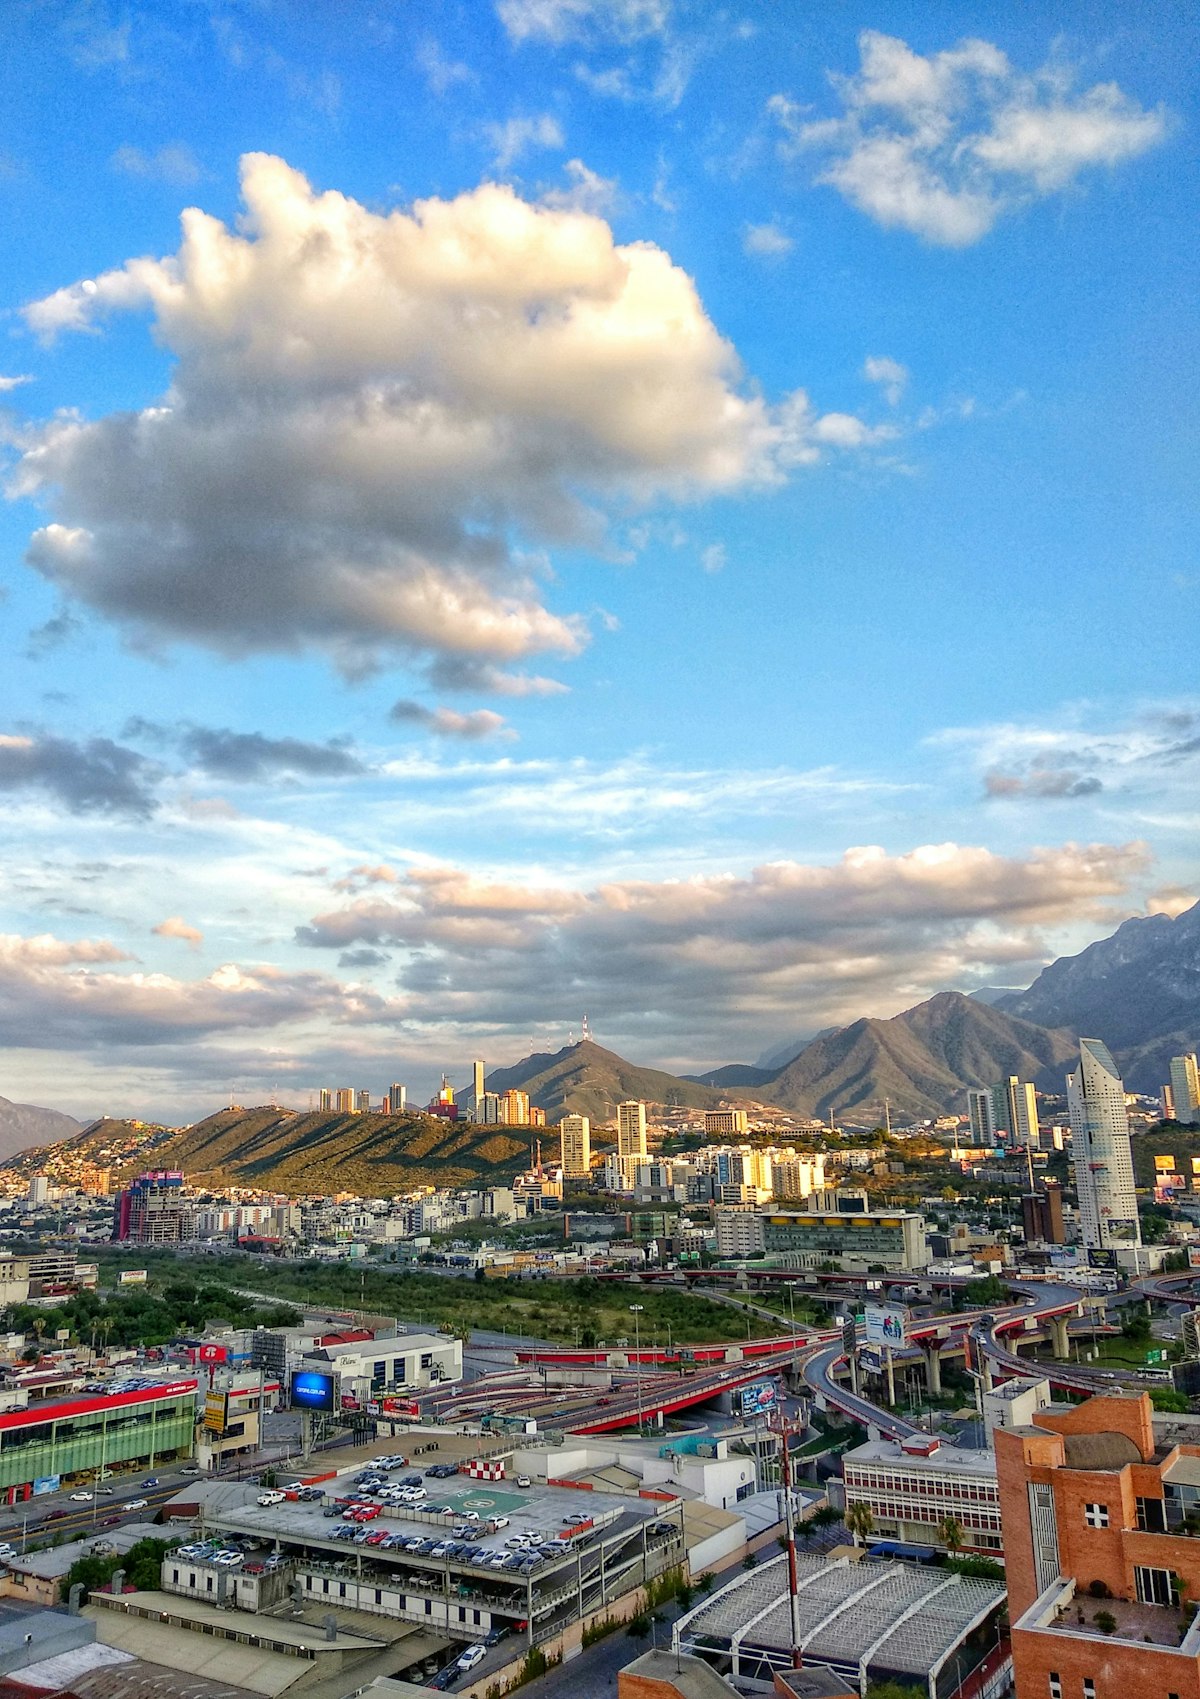 Monterrey: Guadalajara is no longer the 2nd most populated metropolis